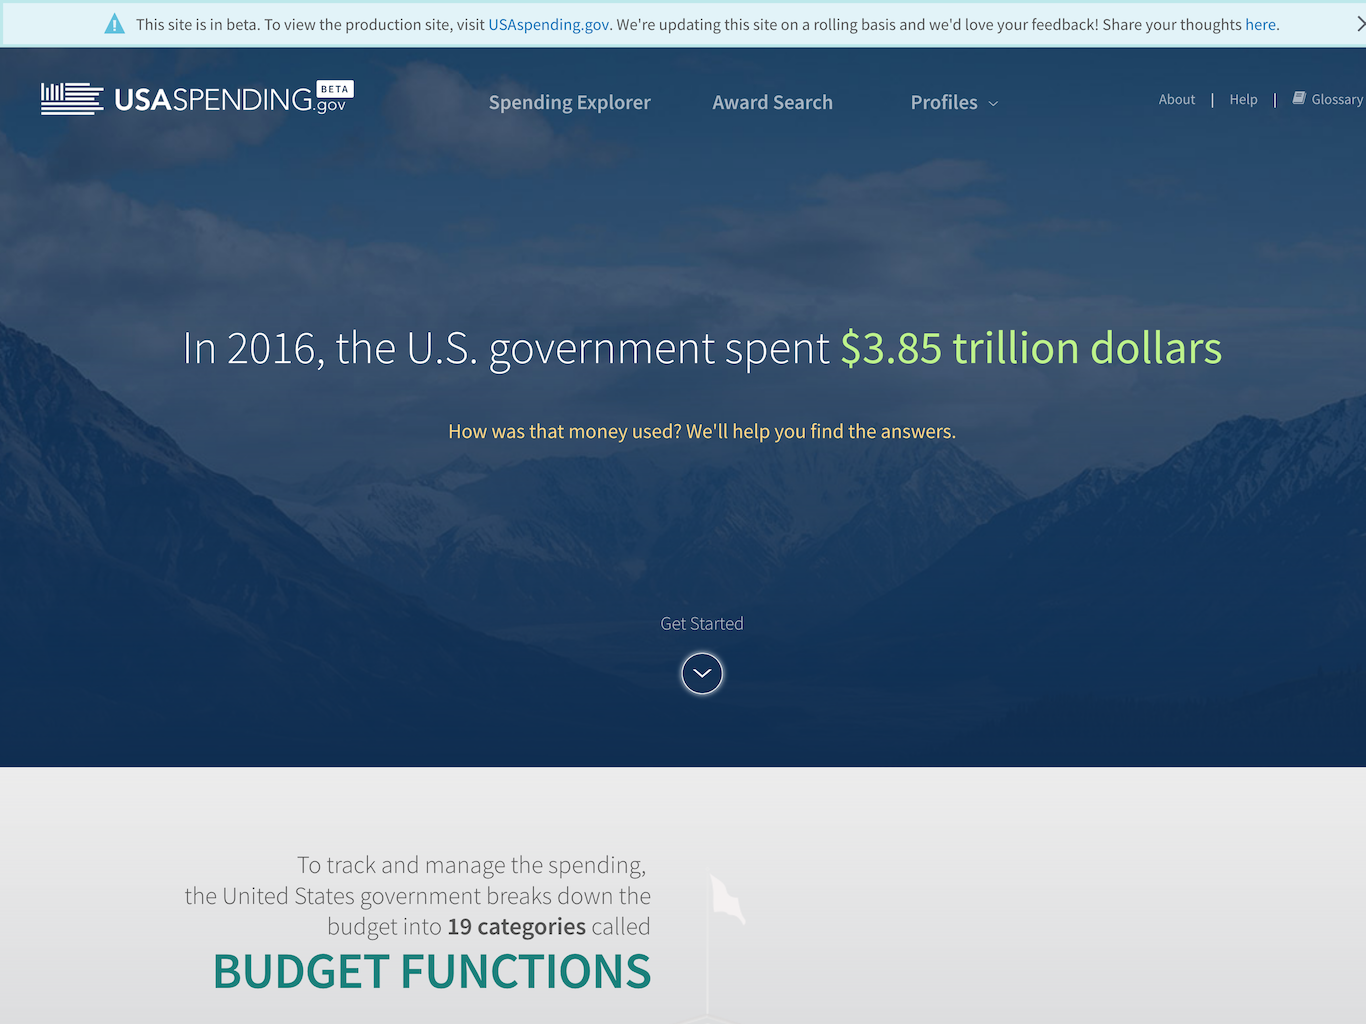 The homepage of beta.usaspending.gov